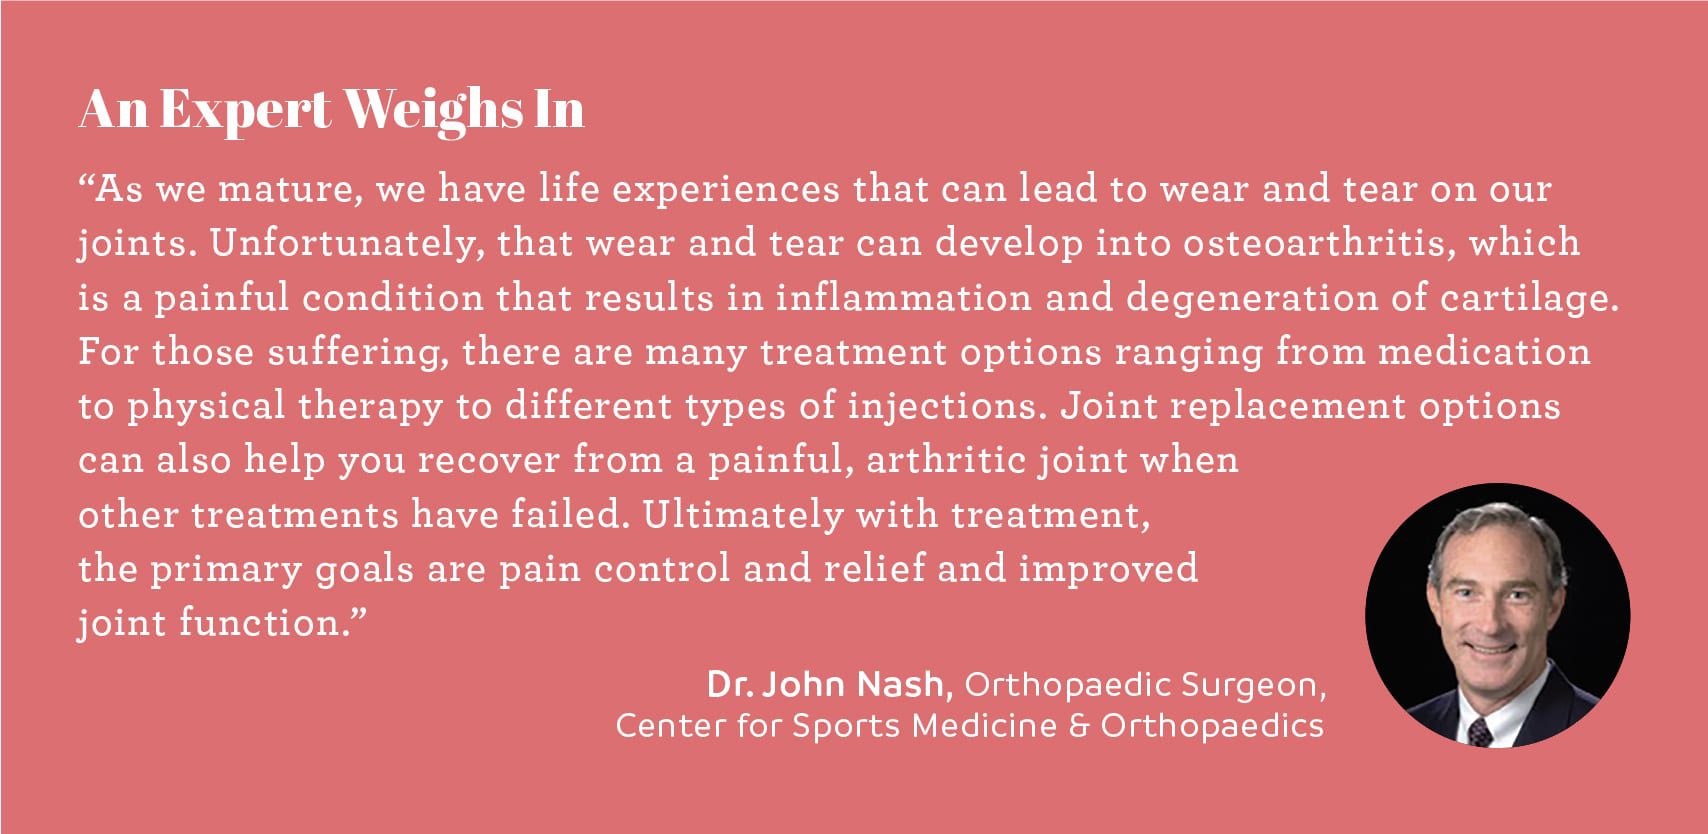 expert opinion chattanooga doctor john nash orthopaedic surgeon center for sports medicine and orthopaedics chattanooga